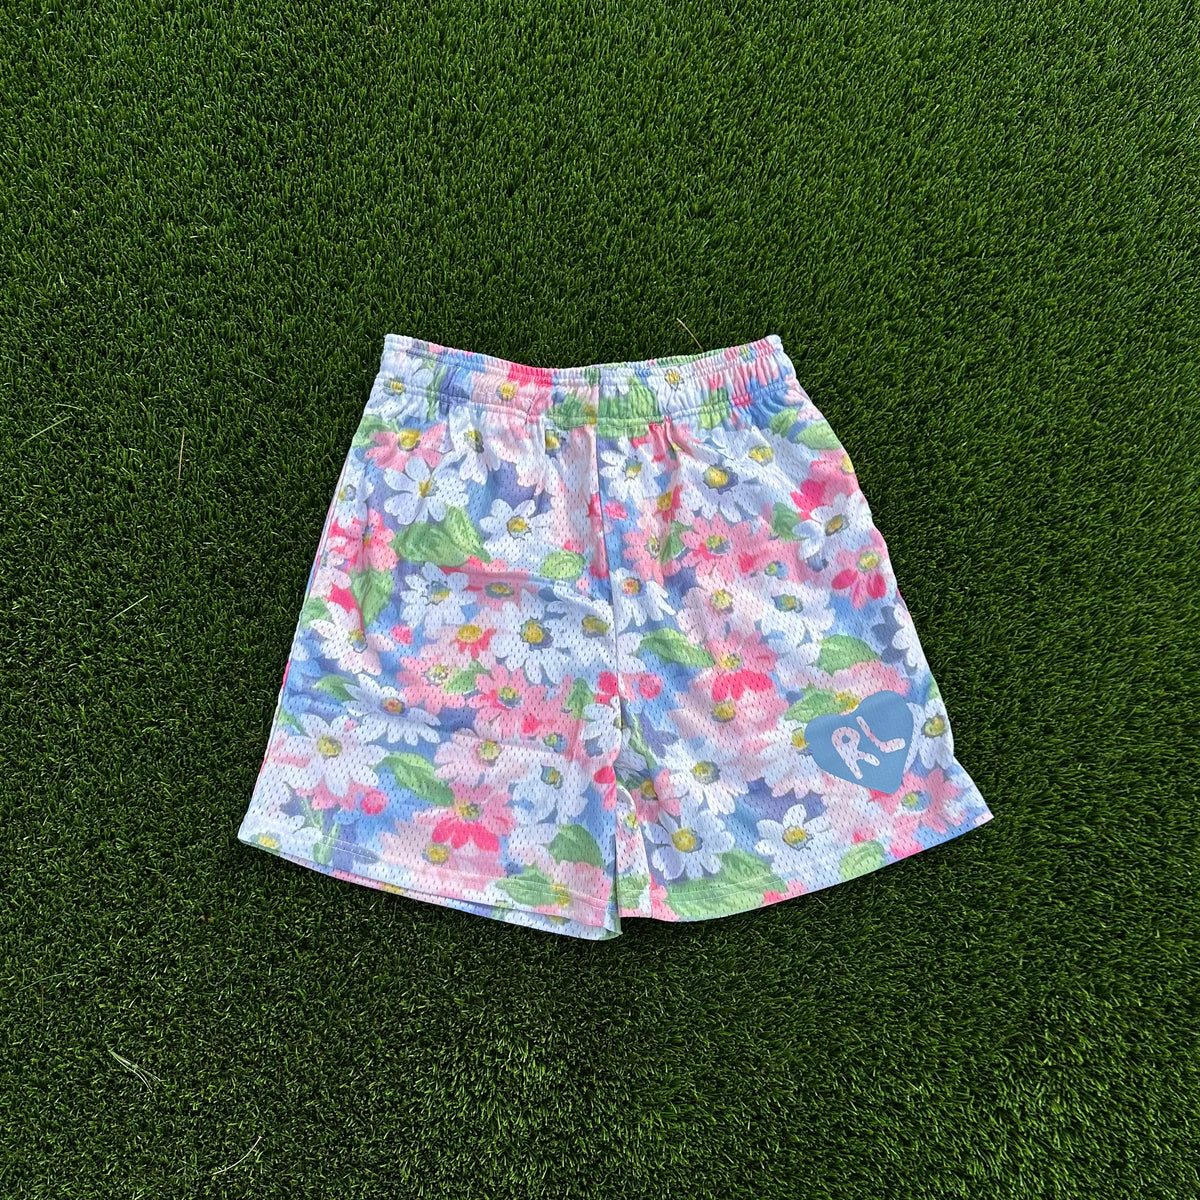 Floral Mesh Shorts